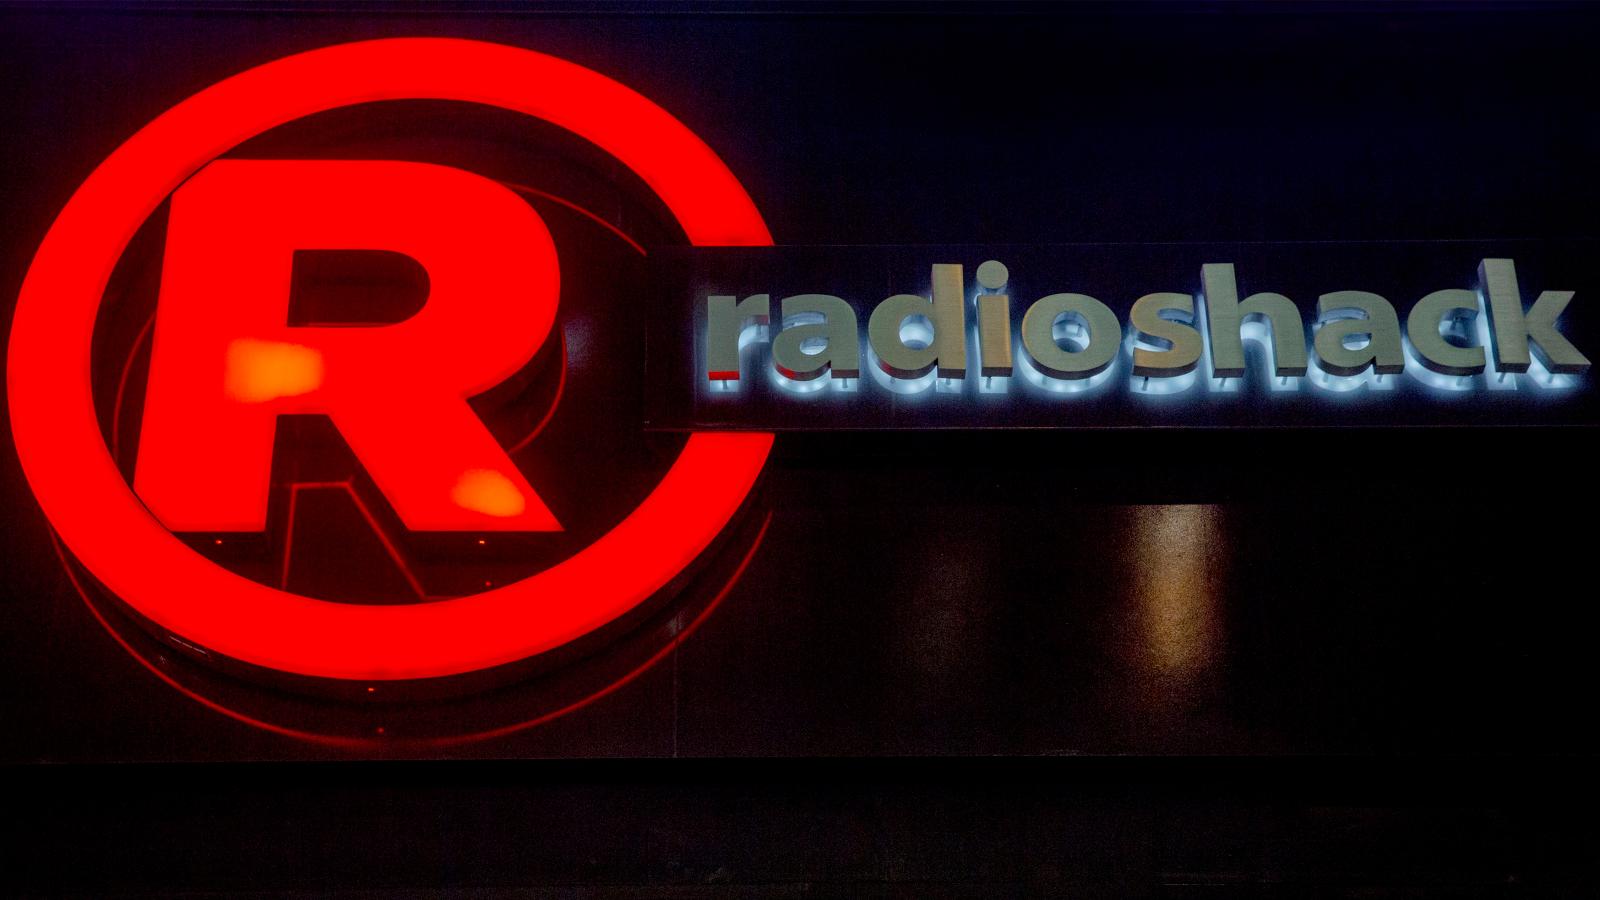 Here S The List Of Proposed Radioshack Store Closings Quartz